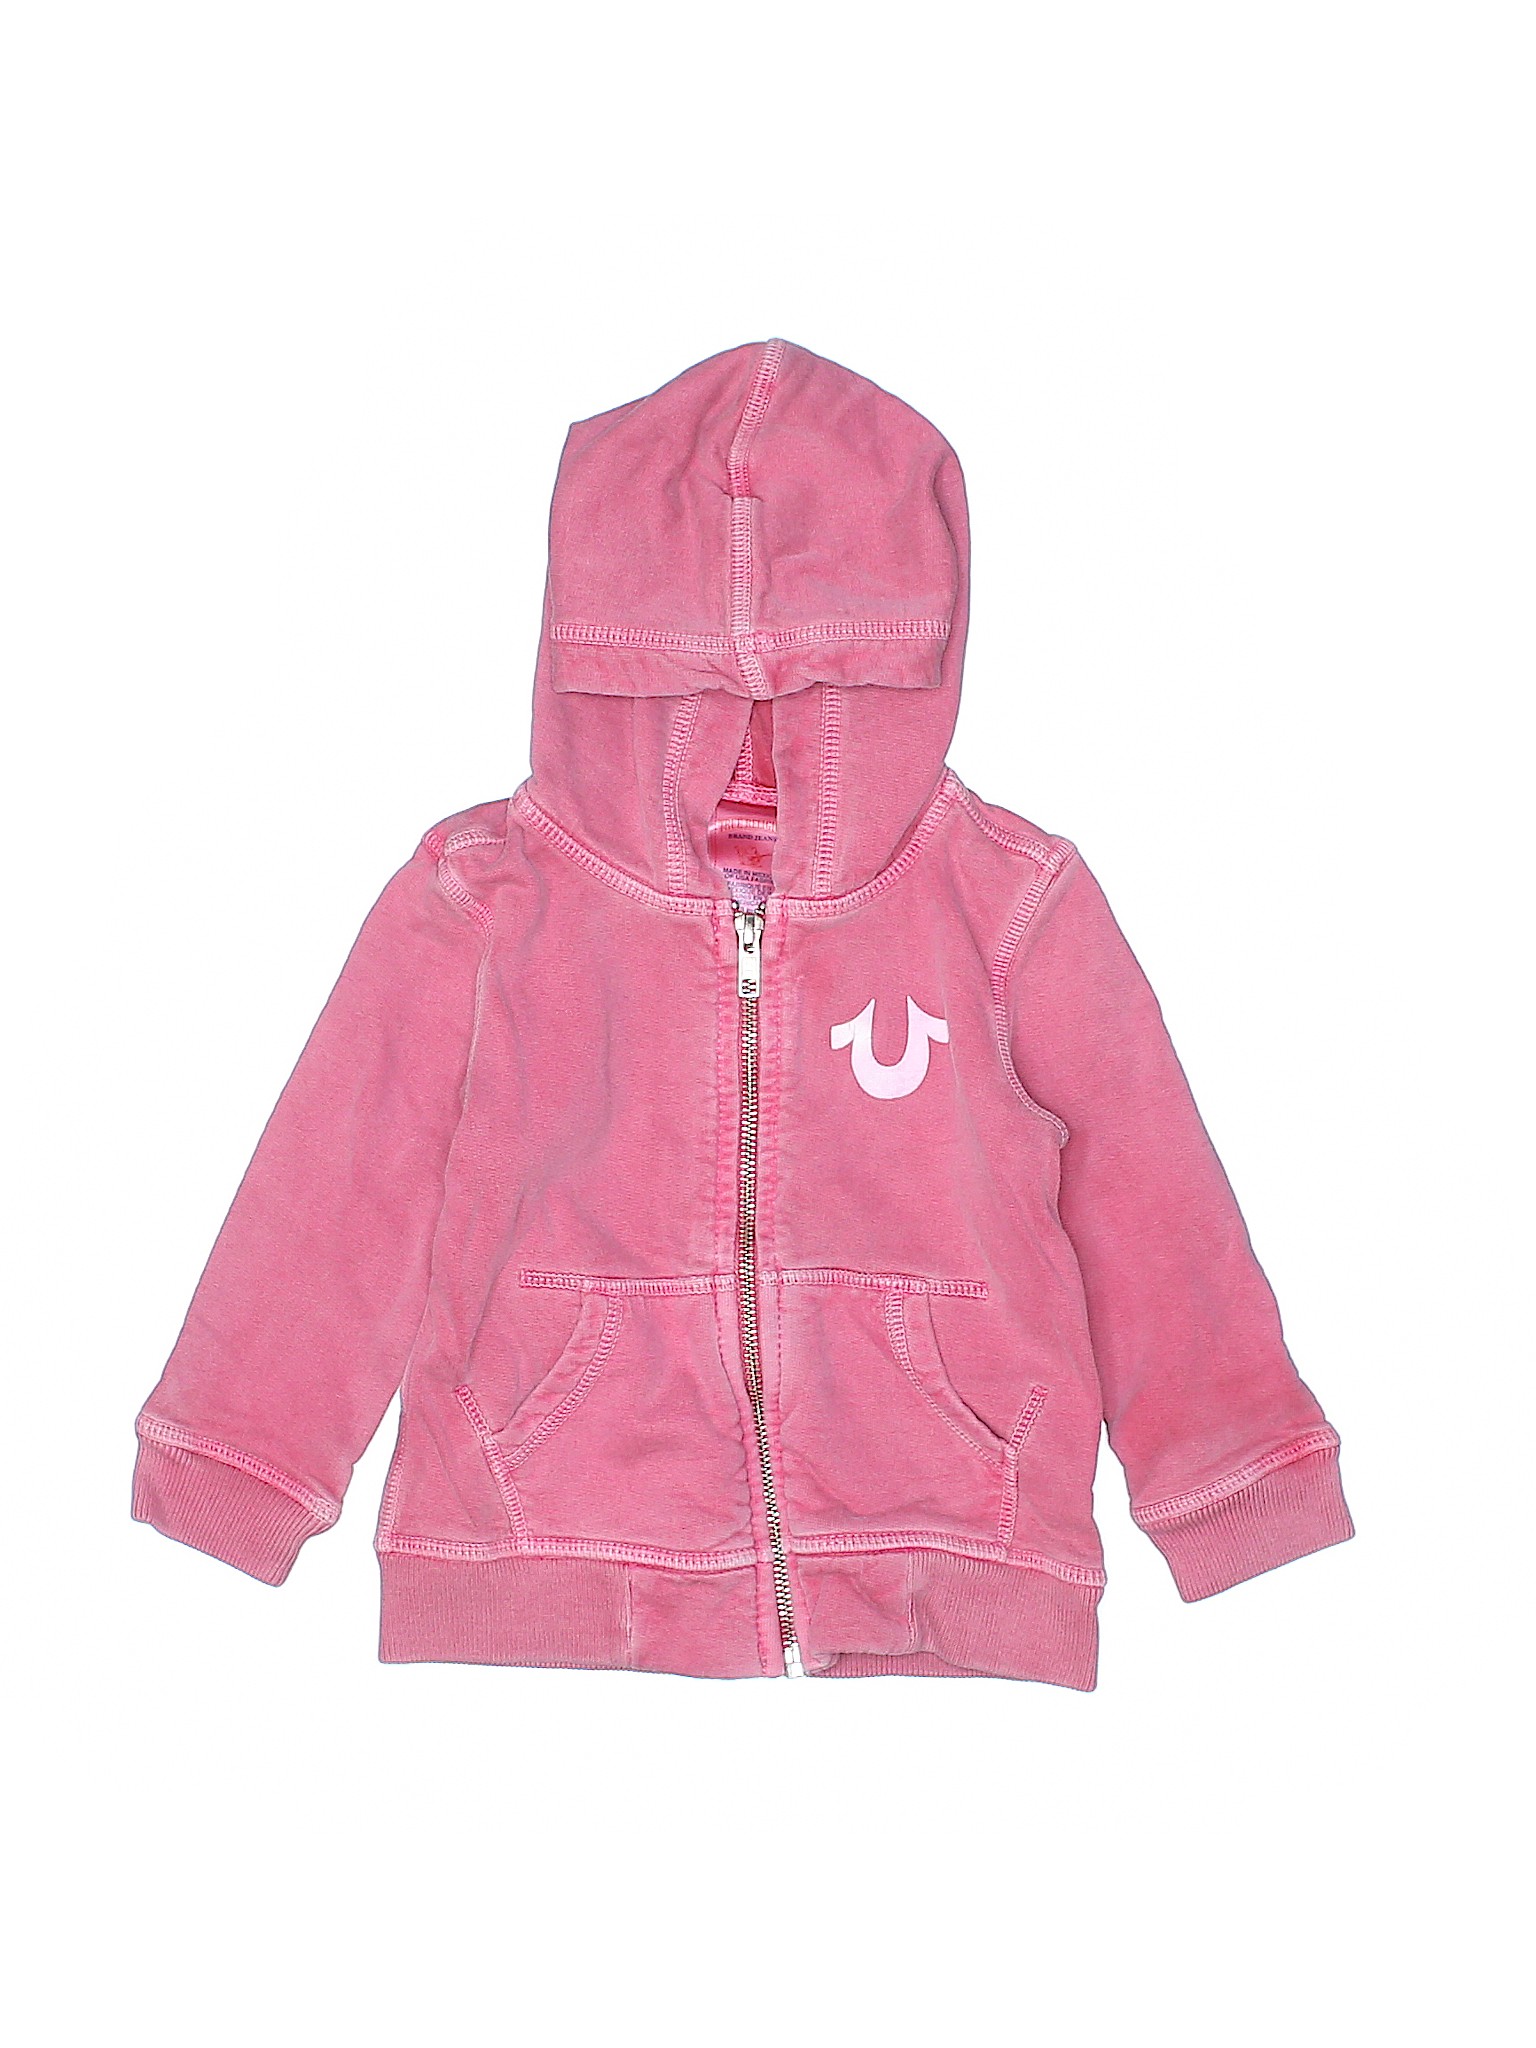 True Religion Zip Up Hoodie in Pink - ASOS Outlet